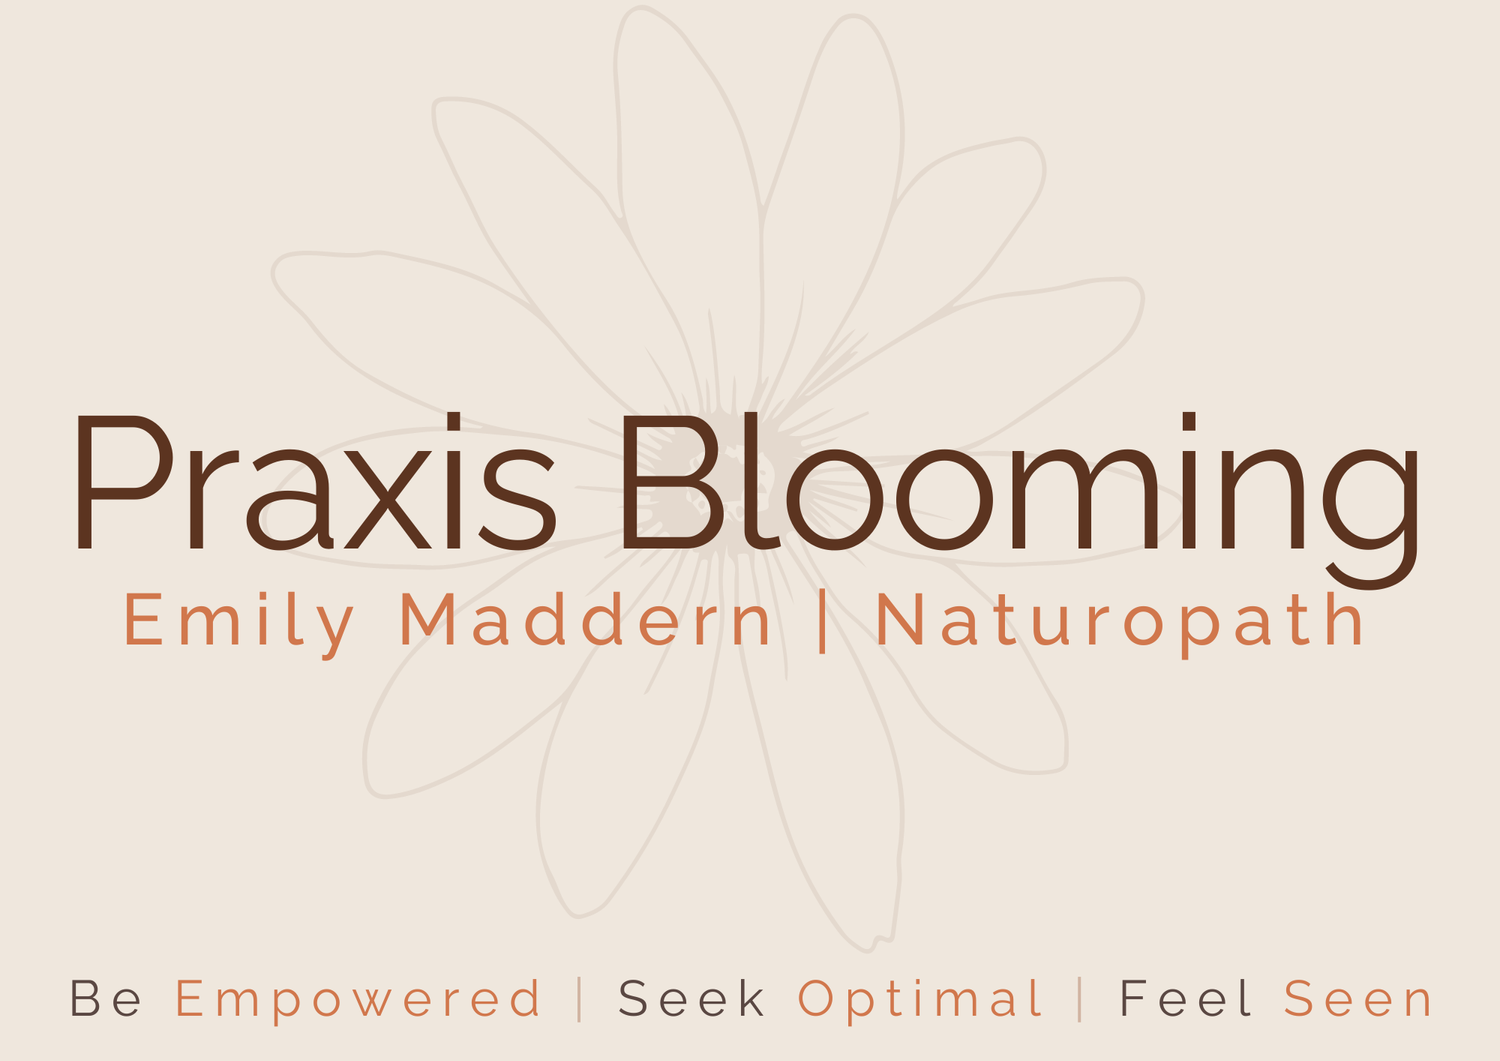 Praxis Blooming / Emily Maddern Naturopath